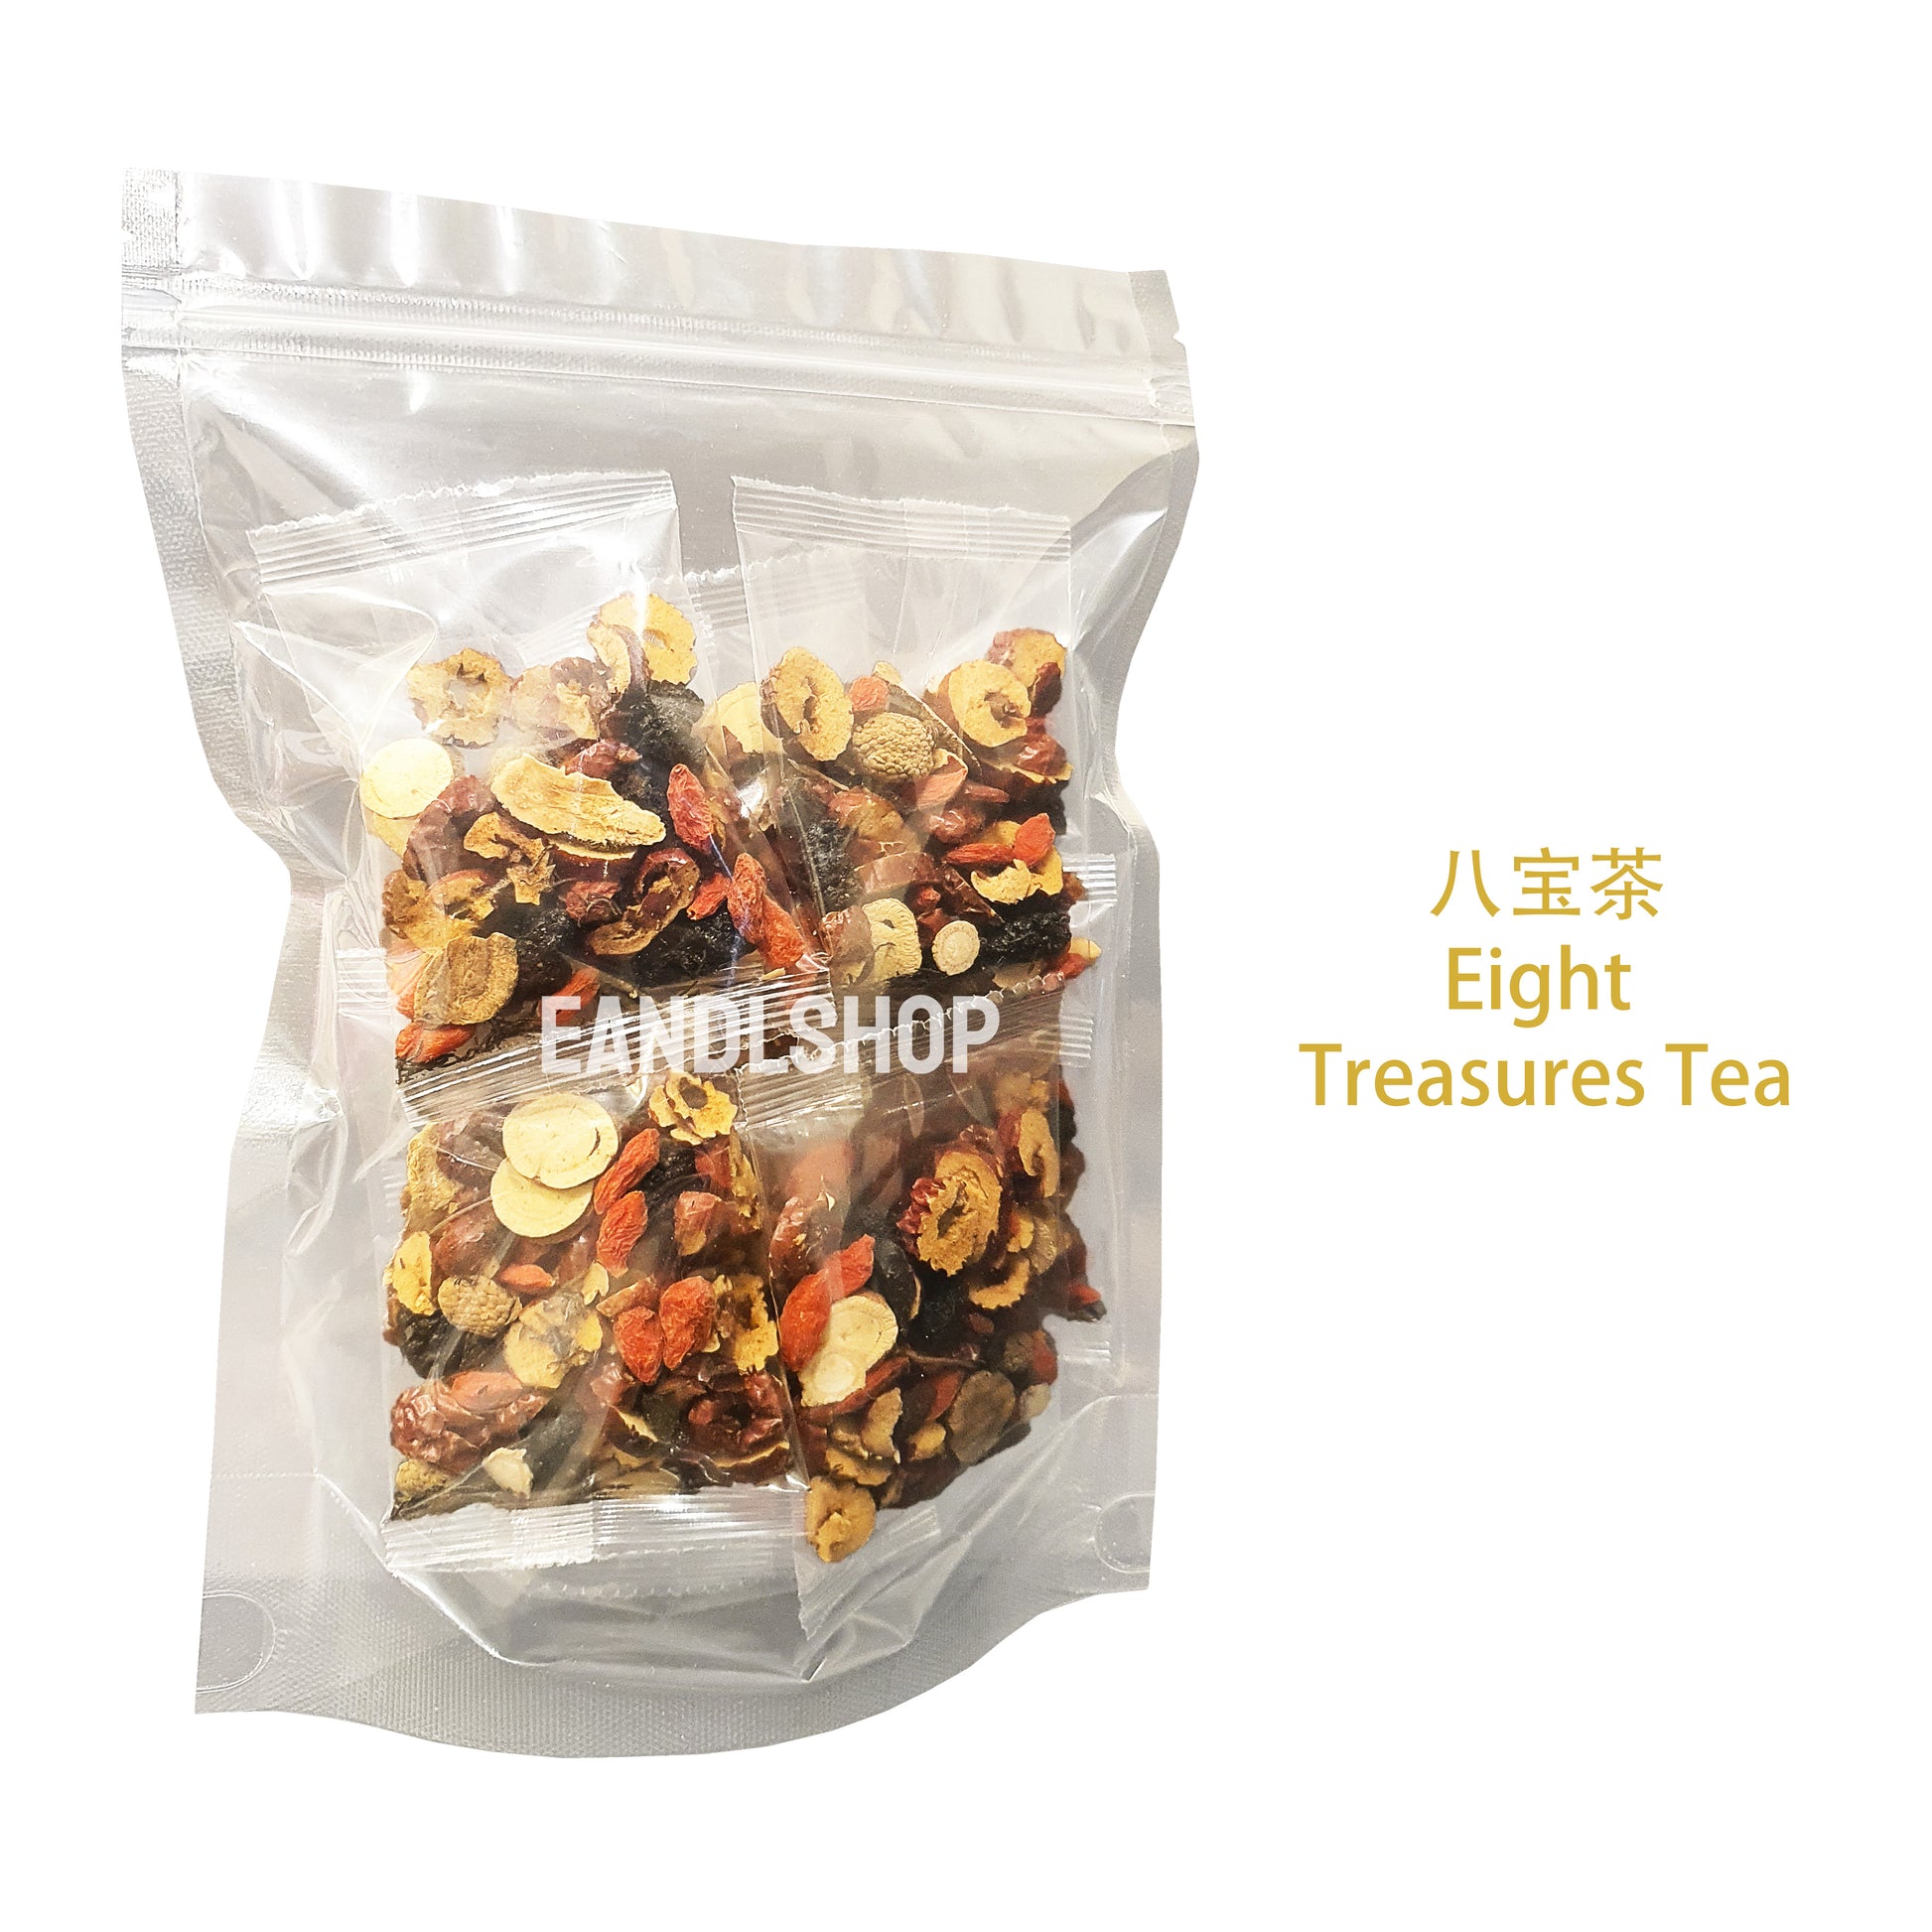 Eight treasure tea. Old-school biscuits, modern snacks (chips, crackers), cakes, gummies, plums, dried fruits, nuts, herbal tea – available at www.EANDLSHOP.com